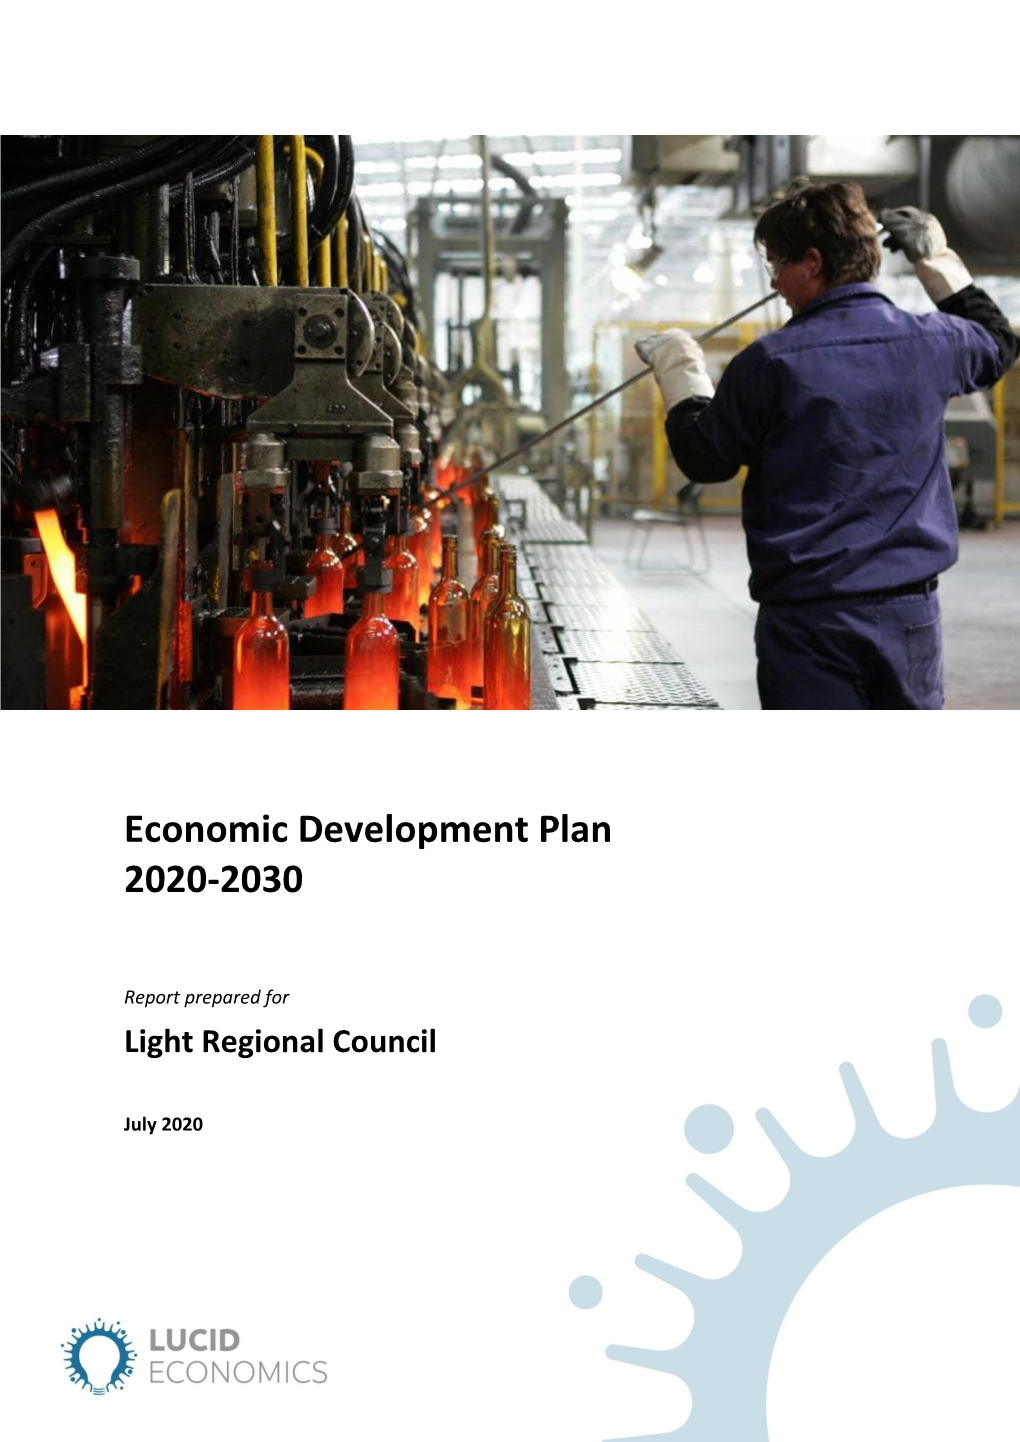 Economic Development Plan 2020-2030